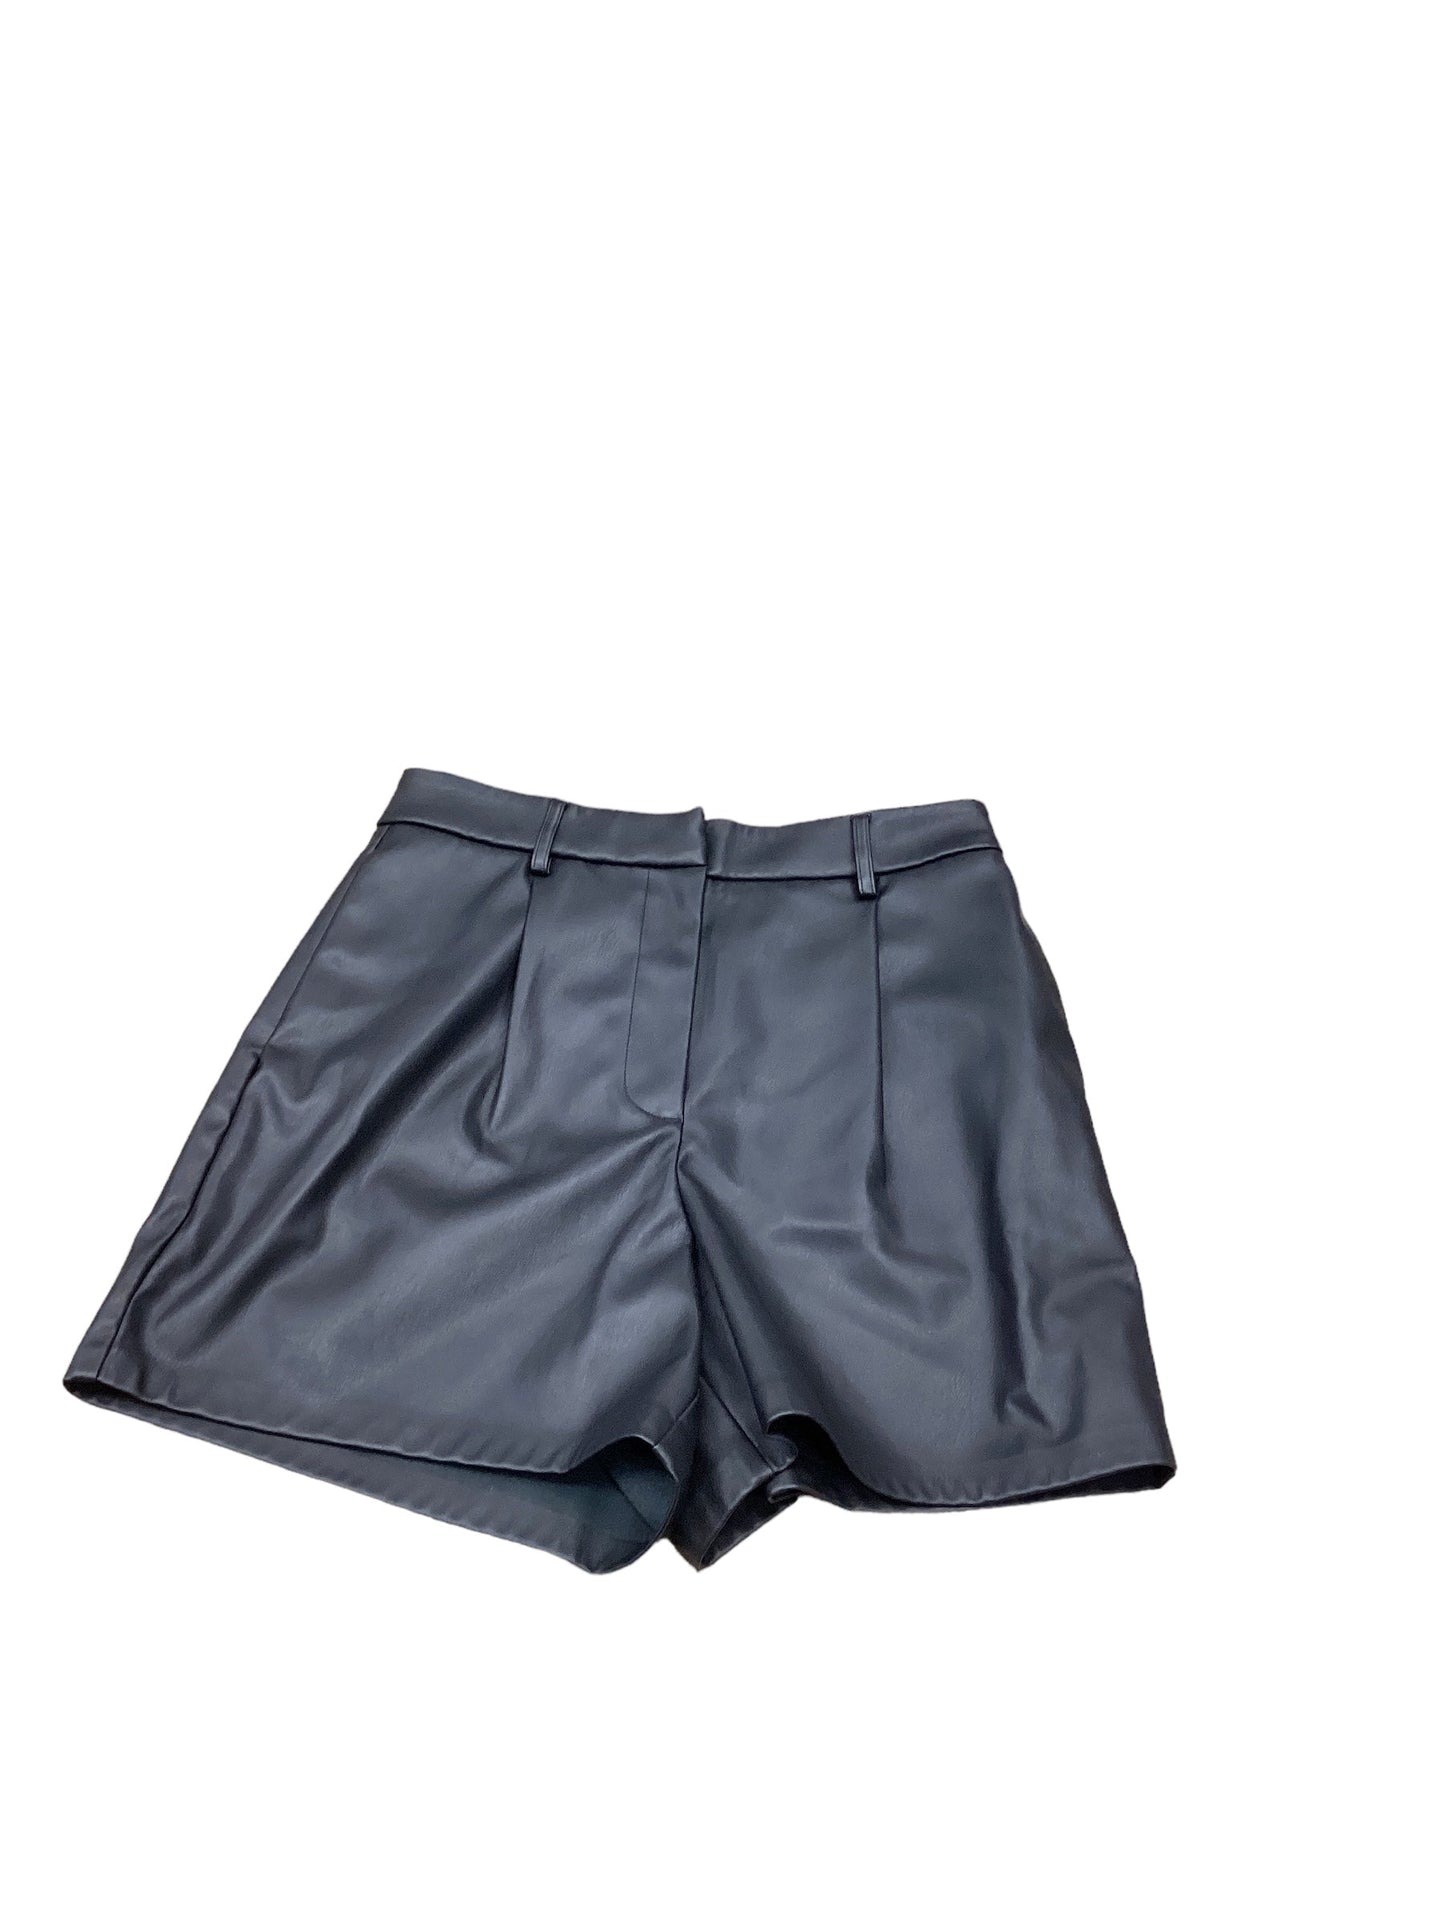 Black Shorts Express, Size 6